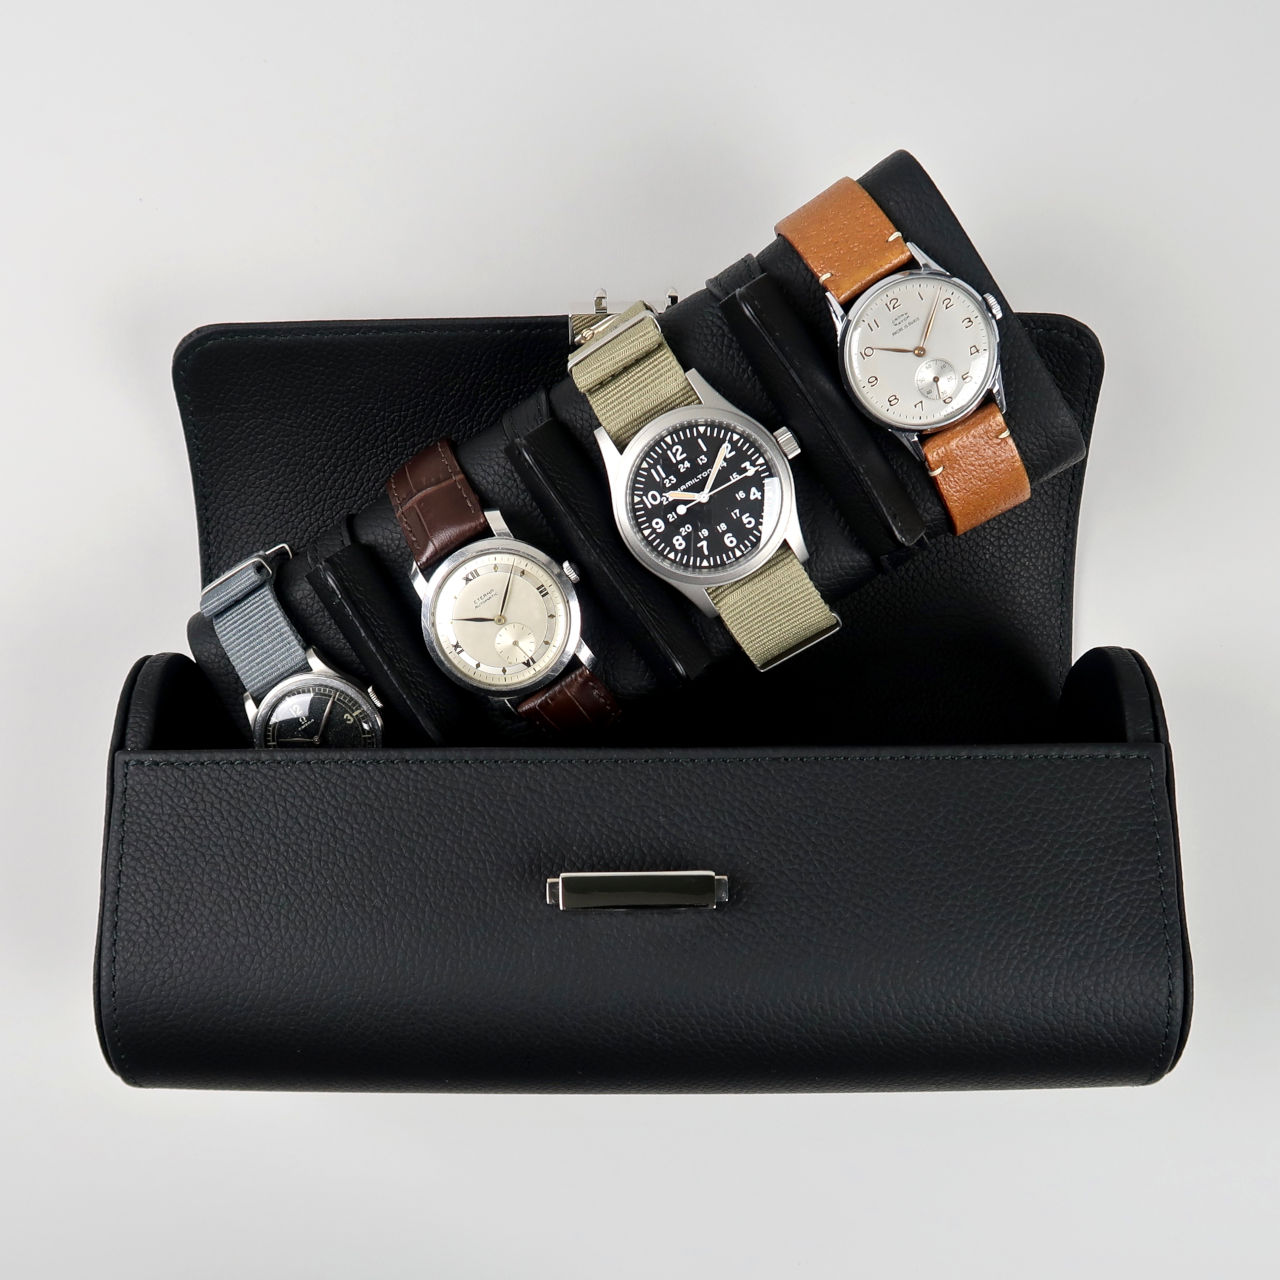 Scatola del Tempo Valigetta Chestnut Leather 4 Watch Travel Case -  450-Valigetta 4 Chestnut